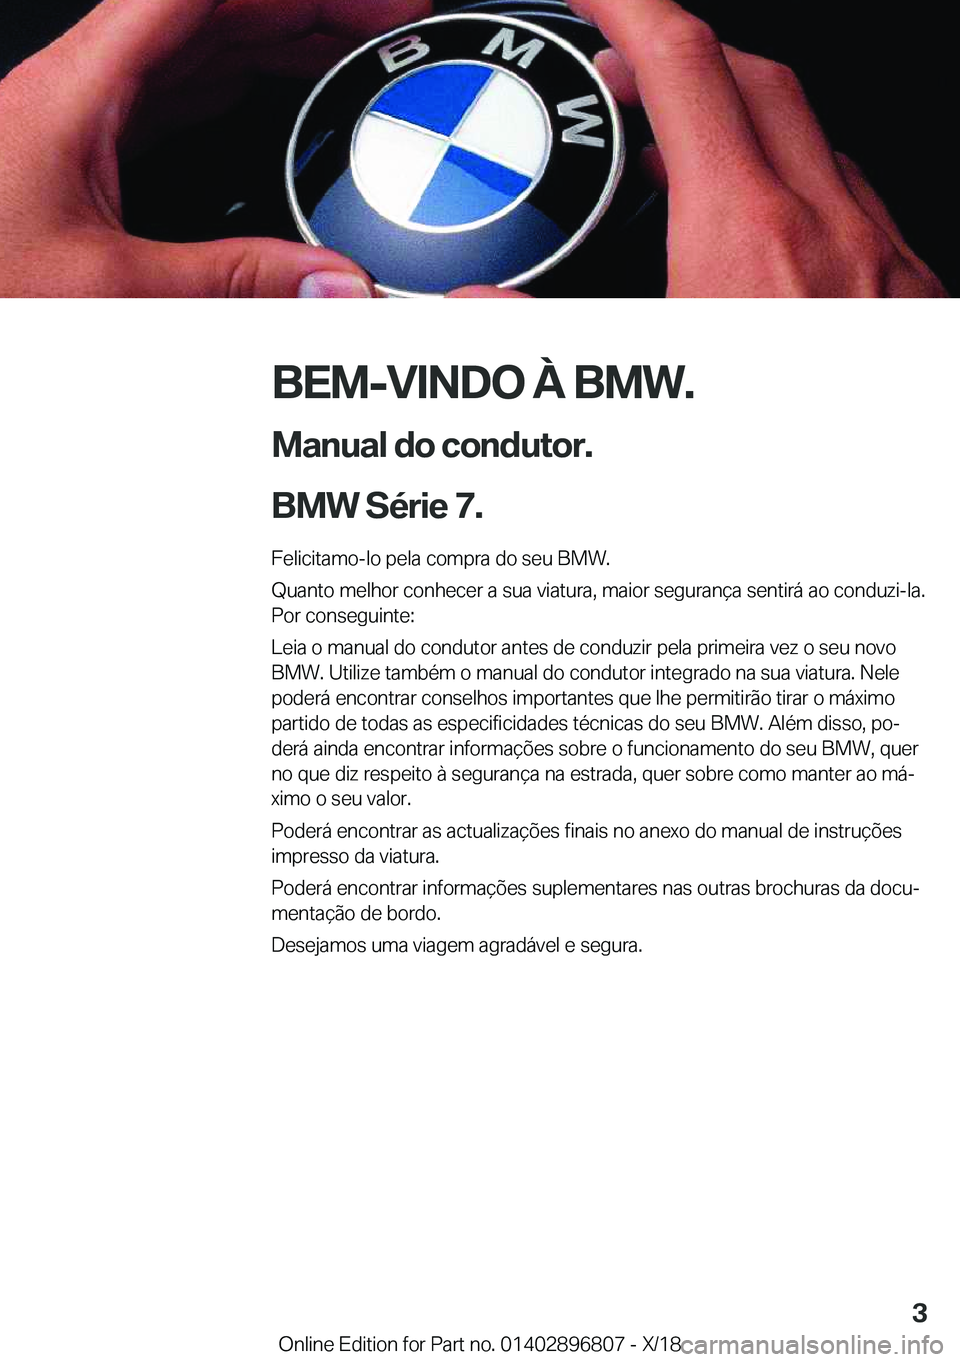 BMW 7 SERIES 2019  Manual do condutor (in Portuguese) �B�E�M�-�V�I�N�D�O��À��B�M�W�.
�M�a�n�u�a�l��d�o��c�o�n�d�u�t�o�r�.
�B�M�W��S�é�r�i�e��7�. �F�e�l�i�c�i�t�a�m�o�-�l�o��p�e�l�a��c�o�m�p�r�a��d�o��s�e�u��B�M�W�.
�Q�u�a�n�t�o��m�e�l�h�o�r